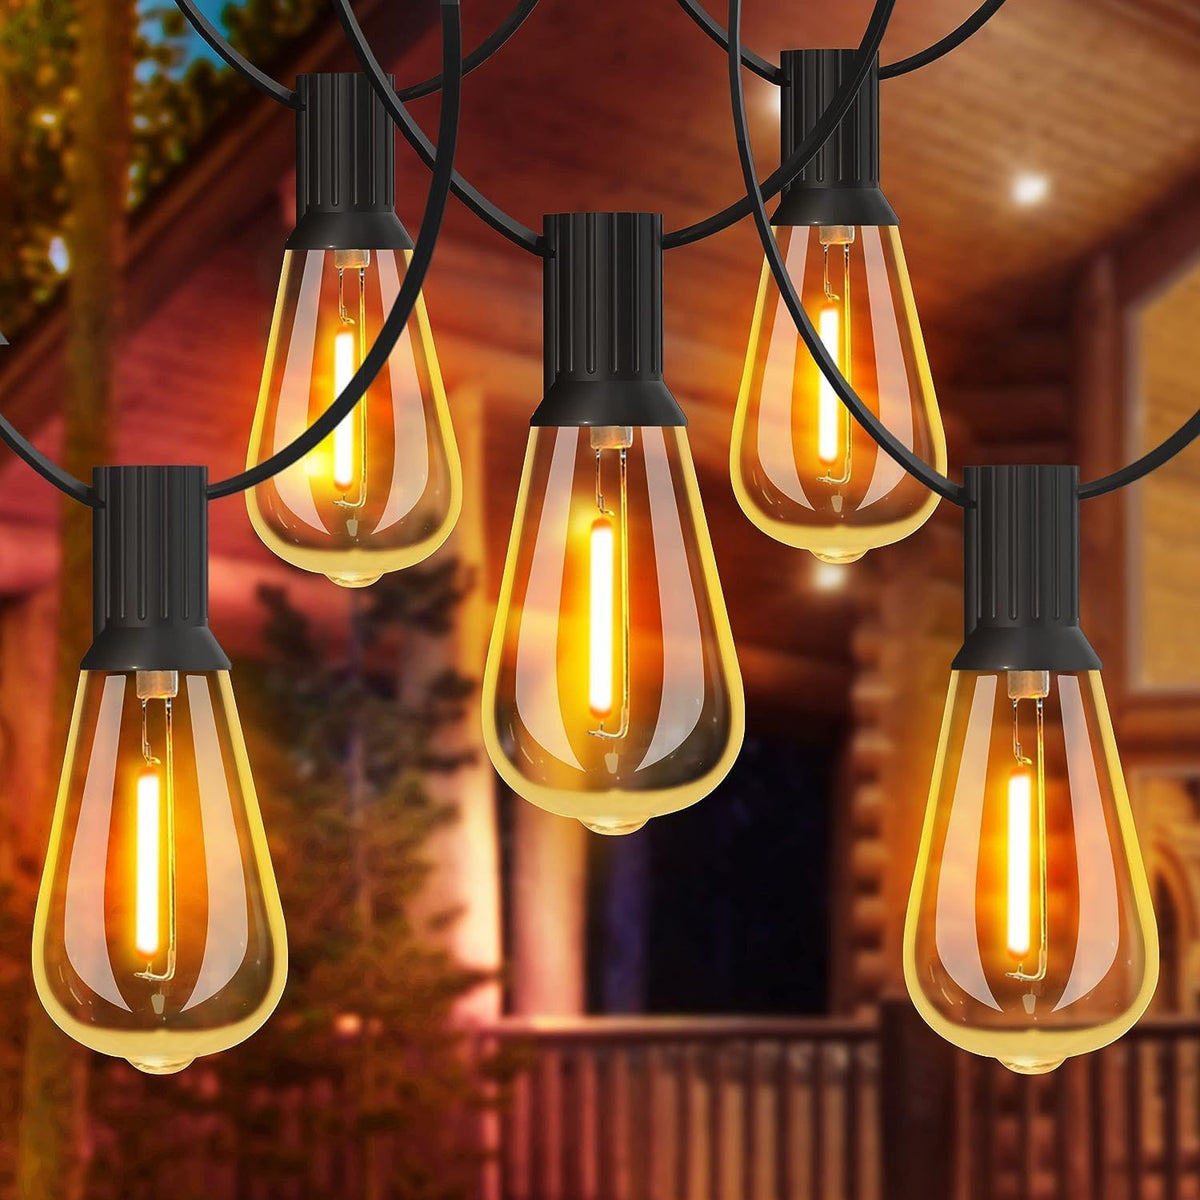 24FT Festoon Lights Outdoor, Garden Patio String Lights Mains Powered, 2200K Warm White, ST64 Waterproof LED String Lights